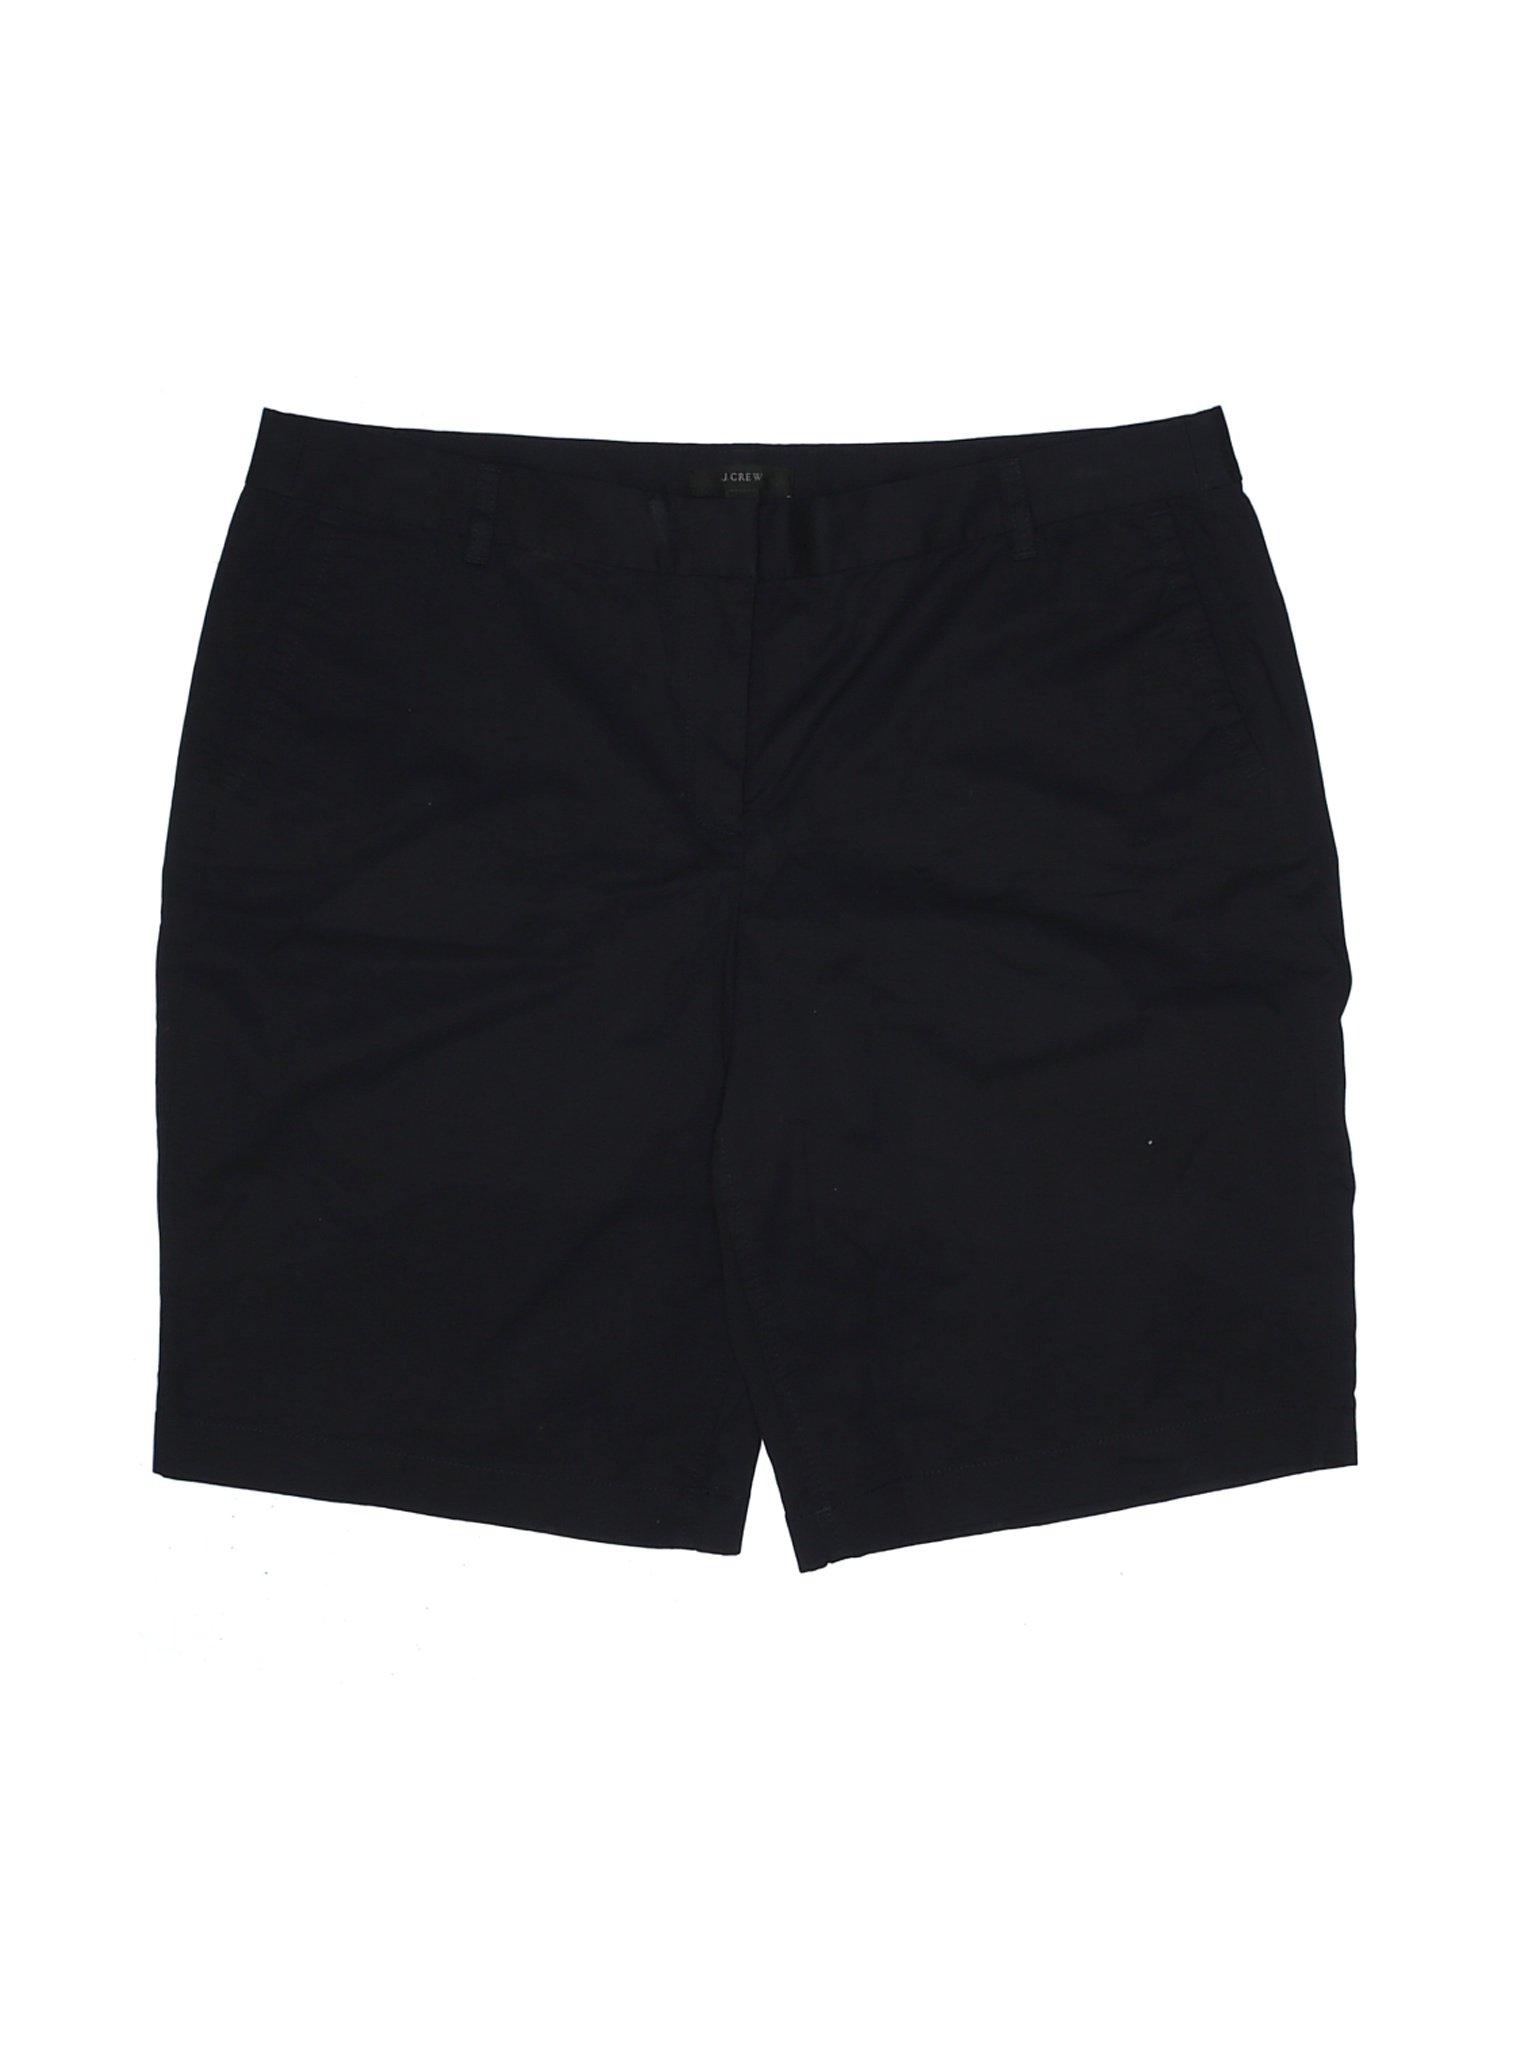 J.Crew Women Black Khaki Shorts 12 | eBay